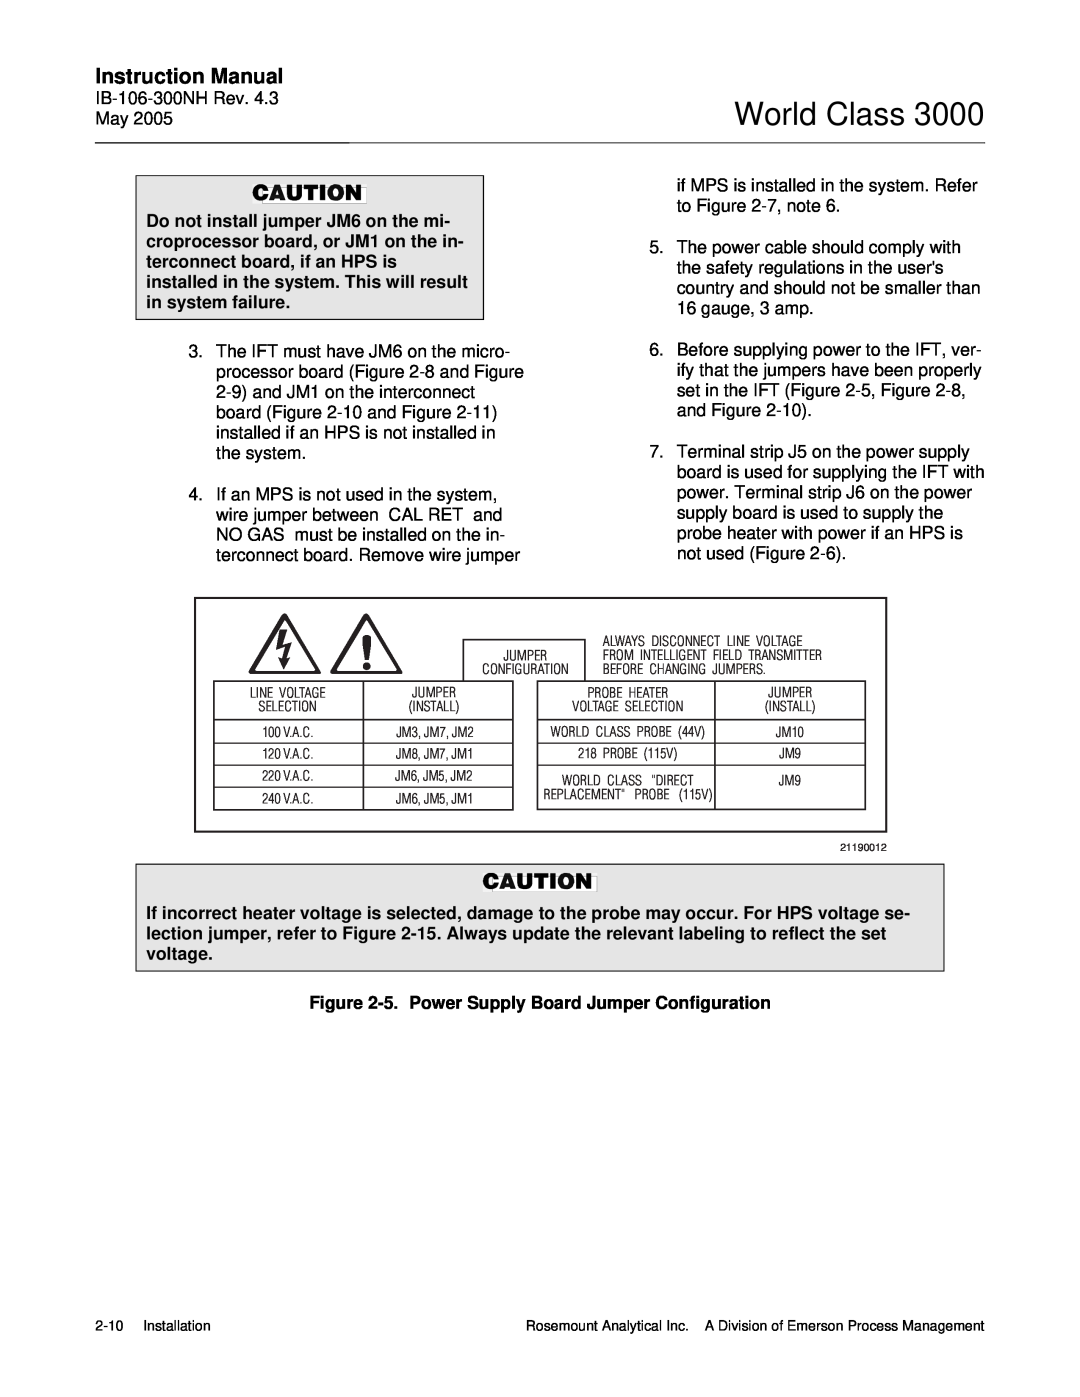 Emerson 3000 instruction manual World Class, Instruction Manual, IB-106-300NHRev. 4.3 May 